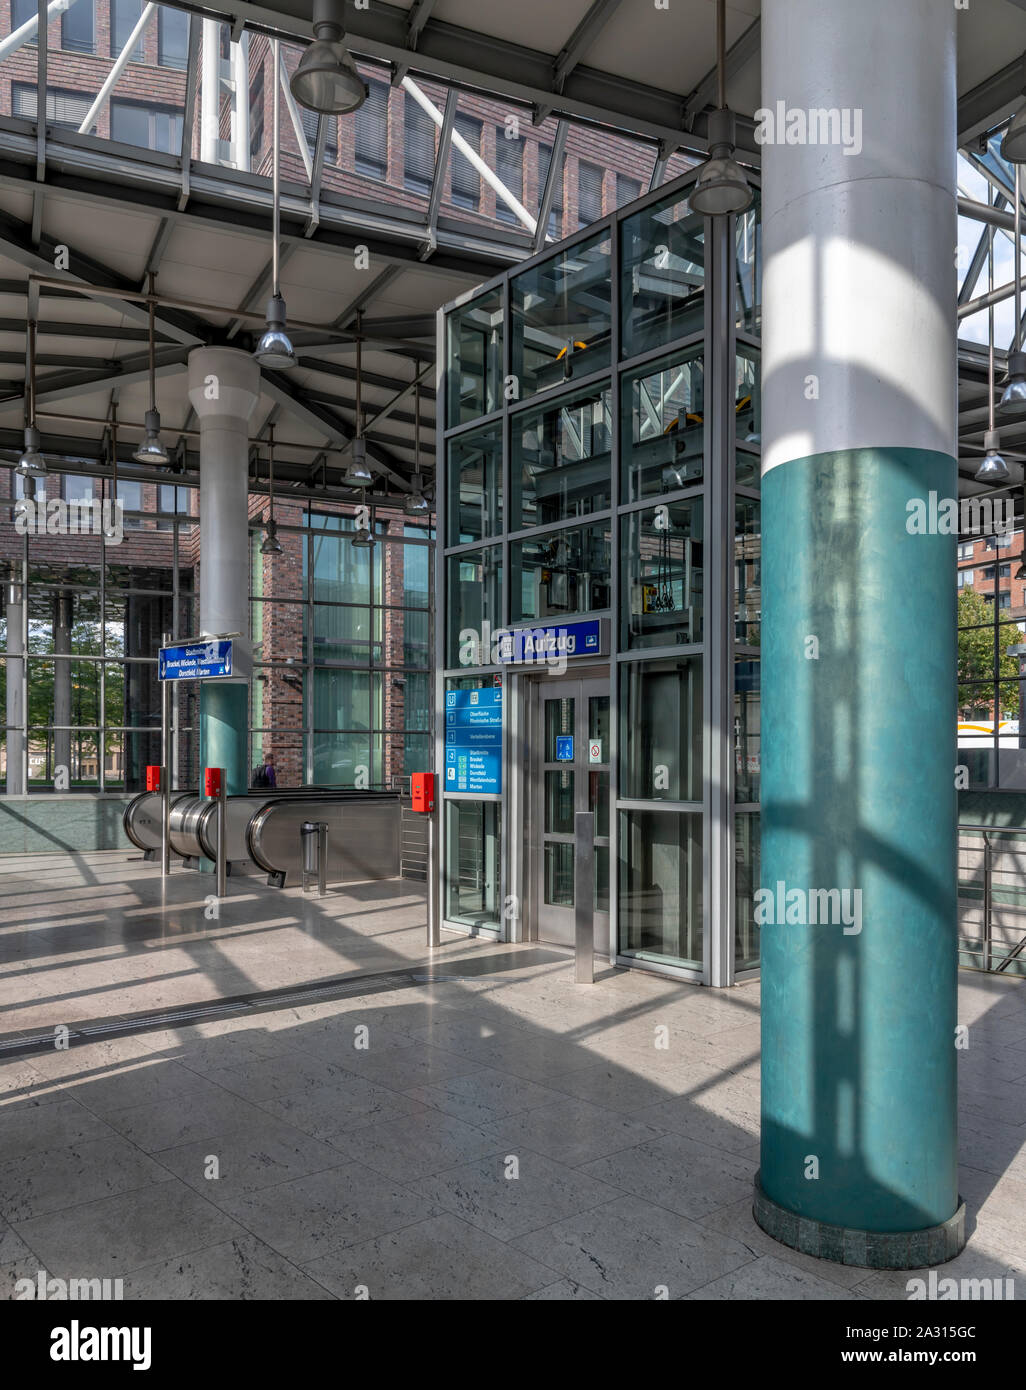 Westentor U-Bahn underground metro station in Dortmund, Germany Stock Photo